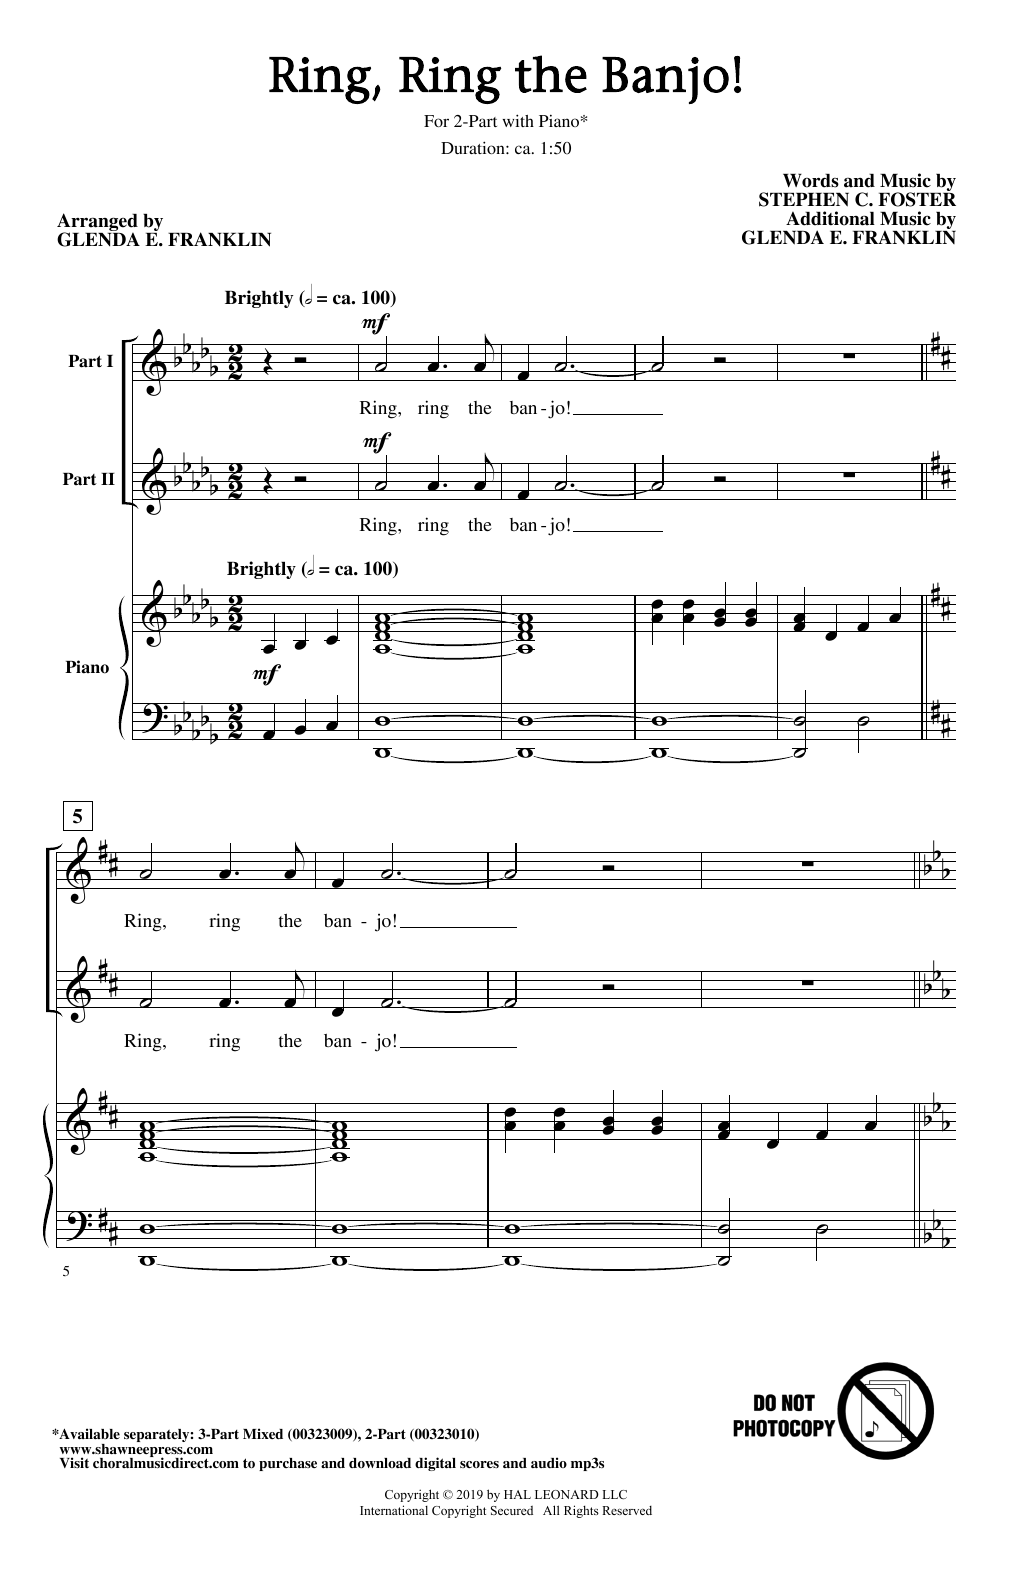 Stephen C. Foster Ring, Ring The Banjo! (arr. Glenda E. Franklin) Sheet Music Notes & Chords for 2-Part Choir - Download or Print PDF